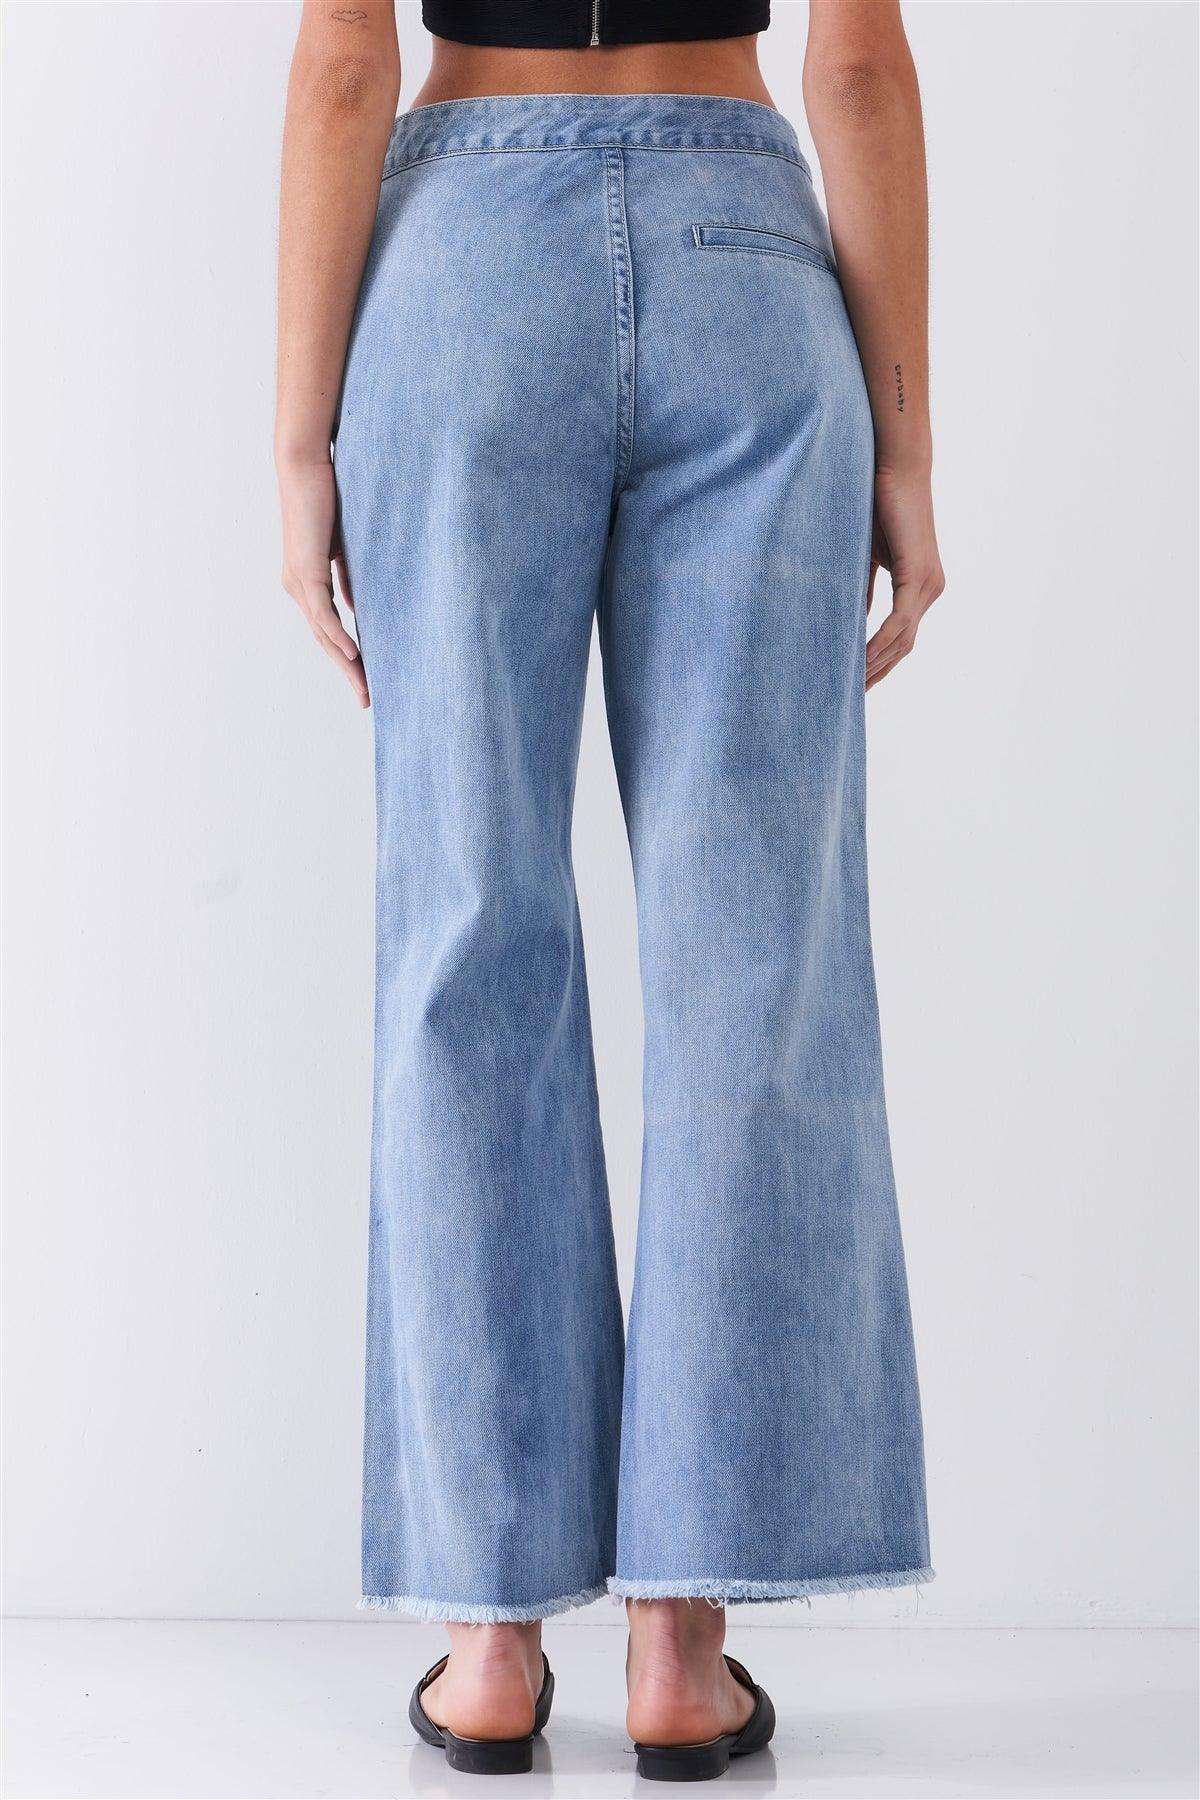 Mid Blue Denim Low-Rise Raw Hem Detail Side Zip-Up Basic Flare Jean Pants